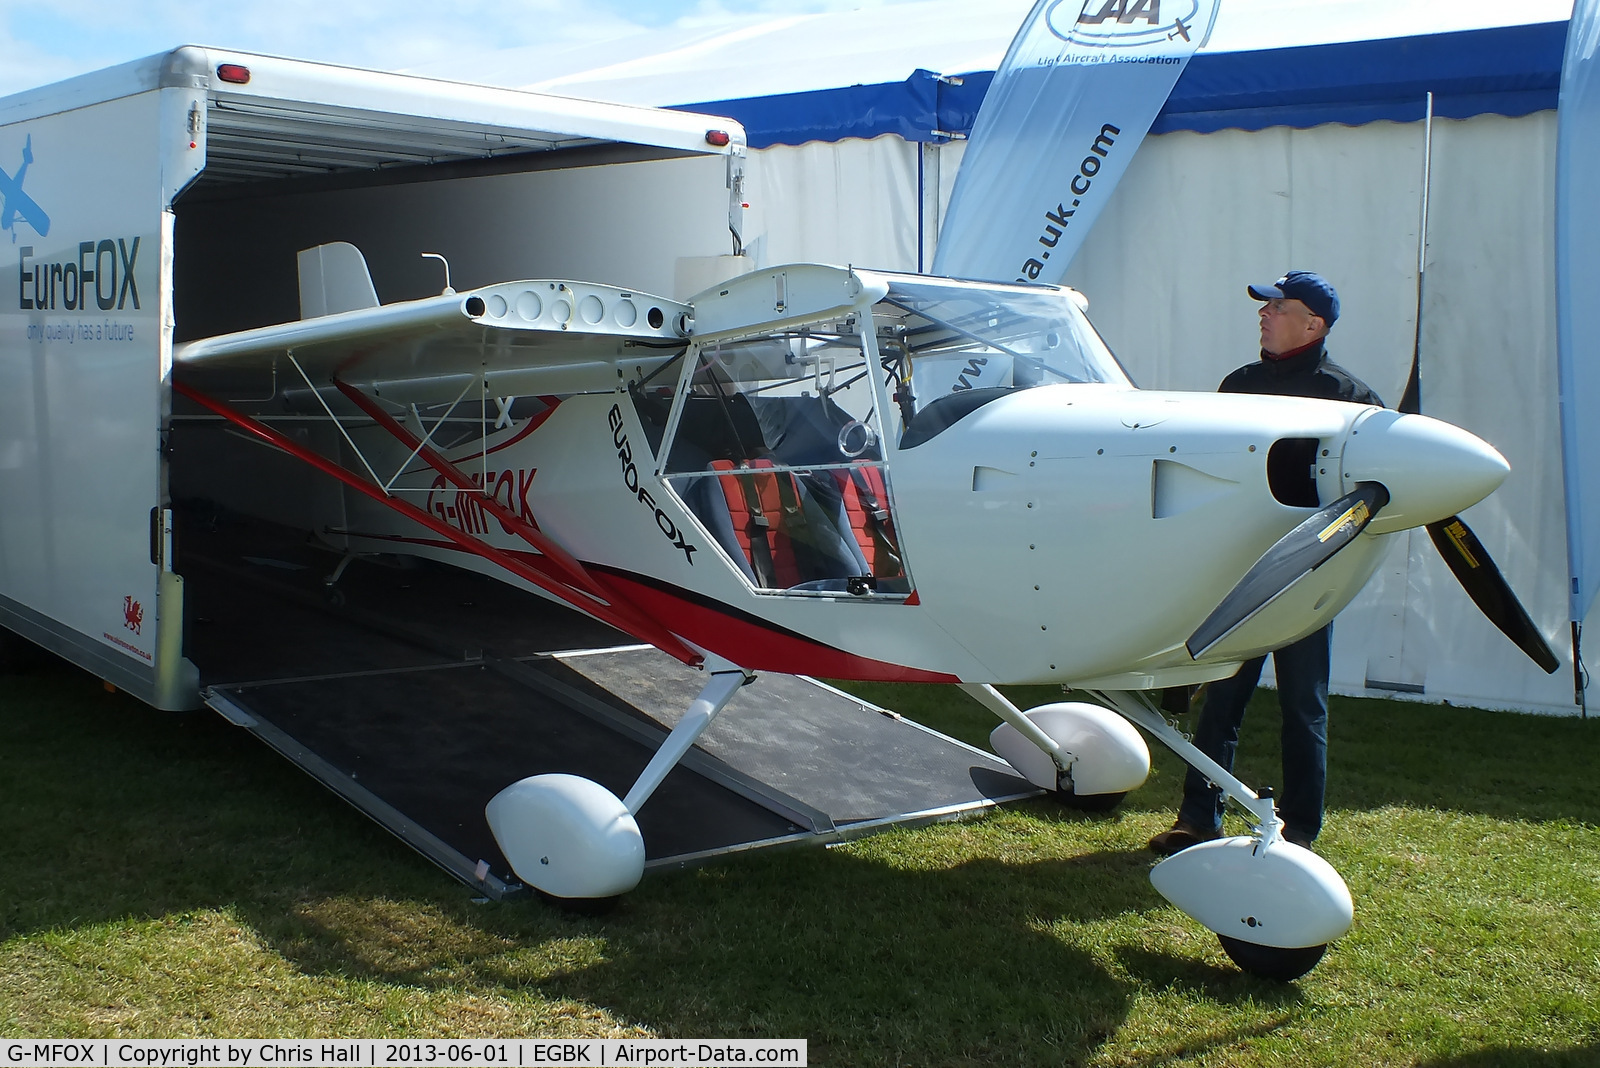 G-MFOX, 2012 Aeropro Eurofox 912(1) C/N BMAA/HB/630, at AeroExpo 2013